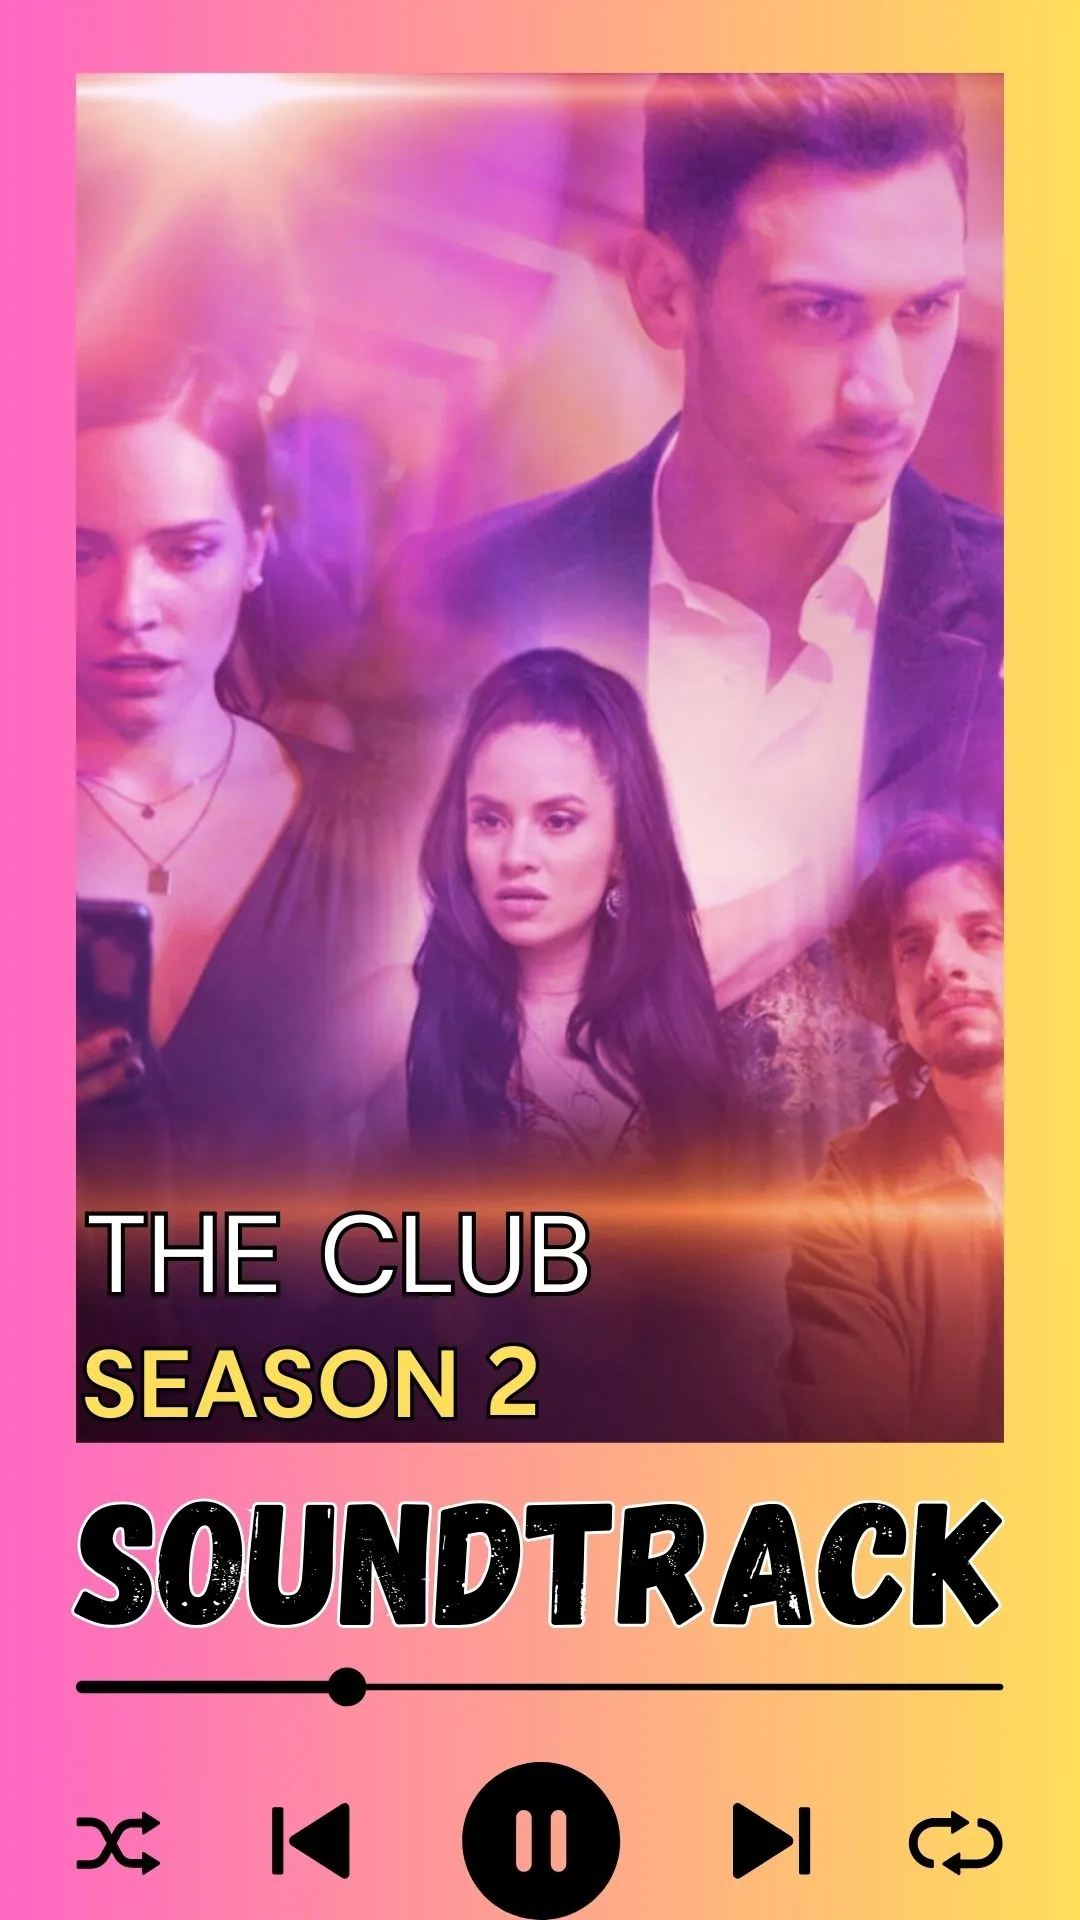 The Club Season 2 Soundtrack